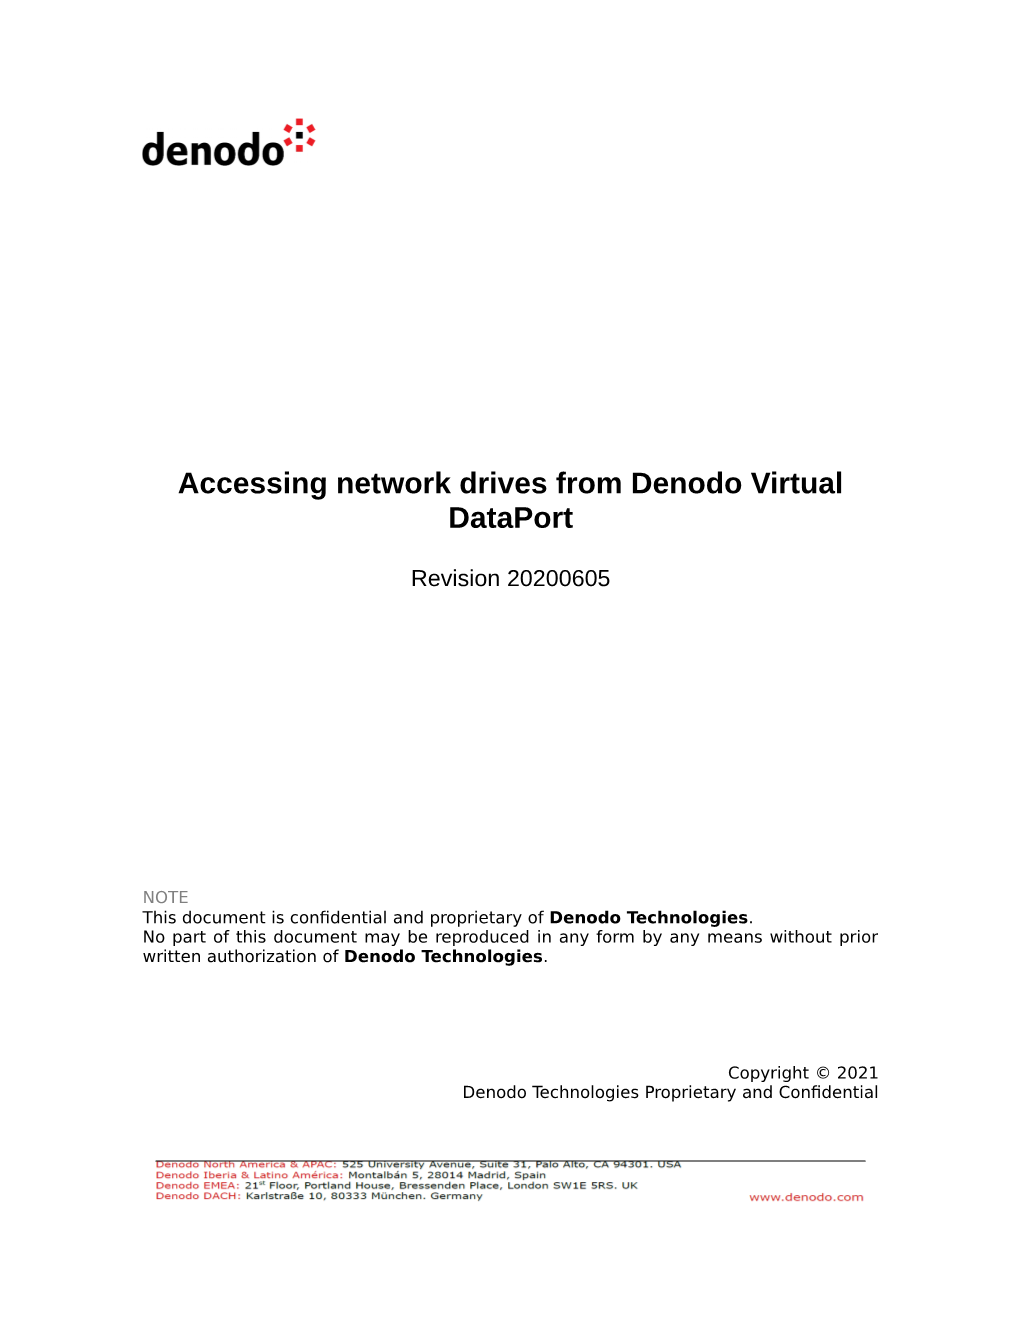 Accessing Network Drives from Denodo Virtual Dataport